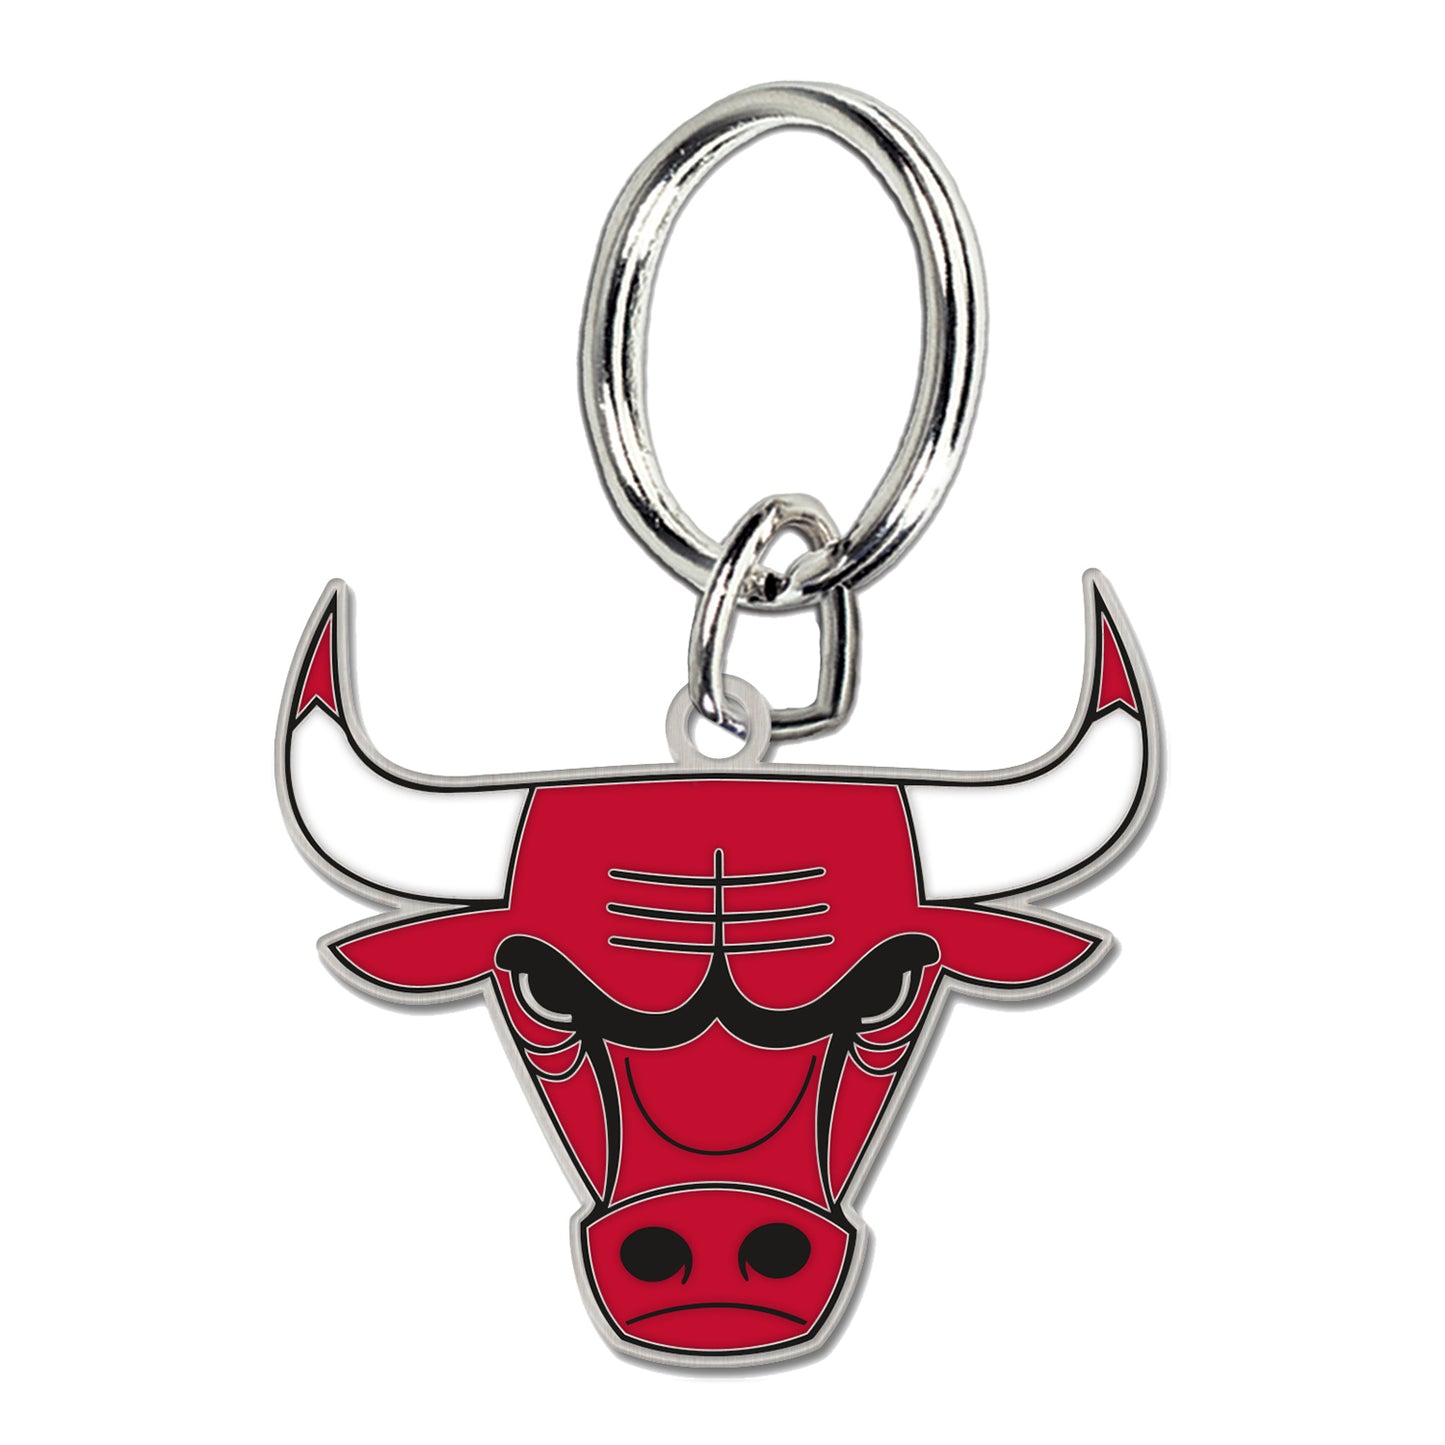 chicago bulls logo with glasses